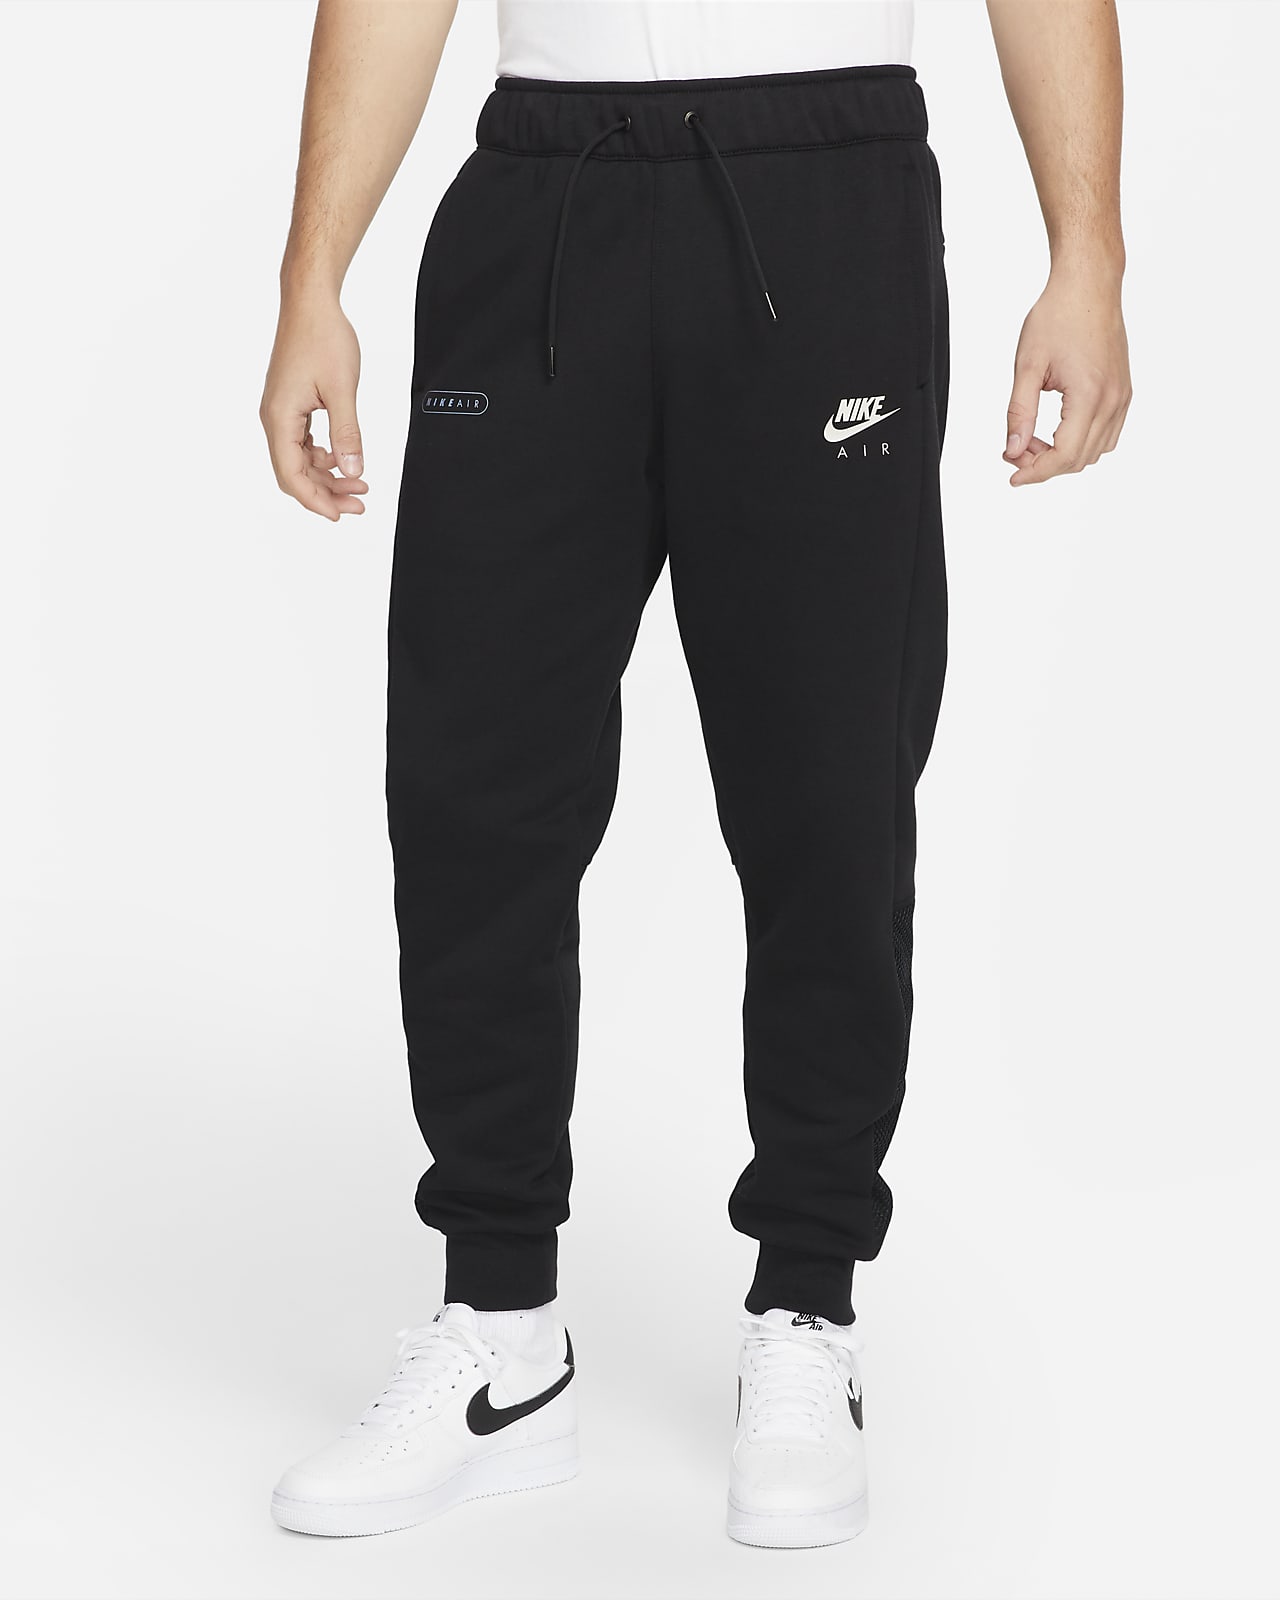 Nike Air Joggers de teixit Fleece raspallat - Home